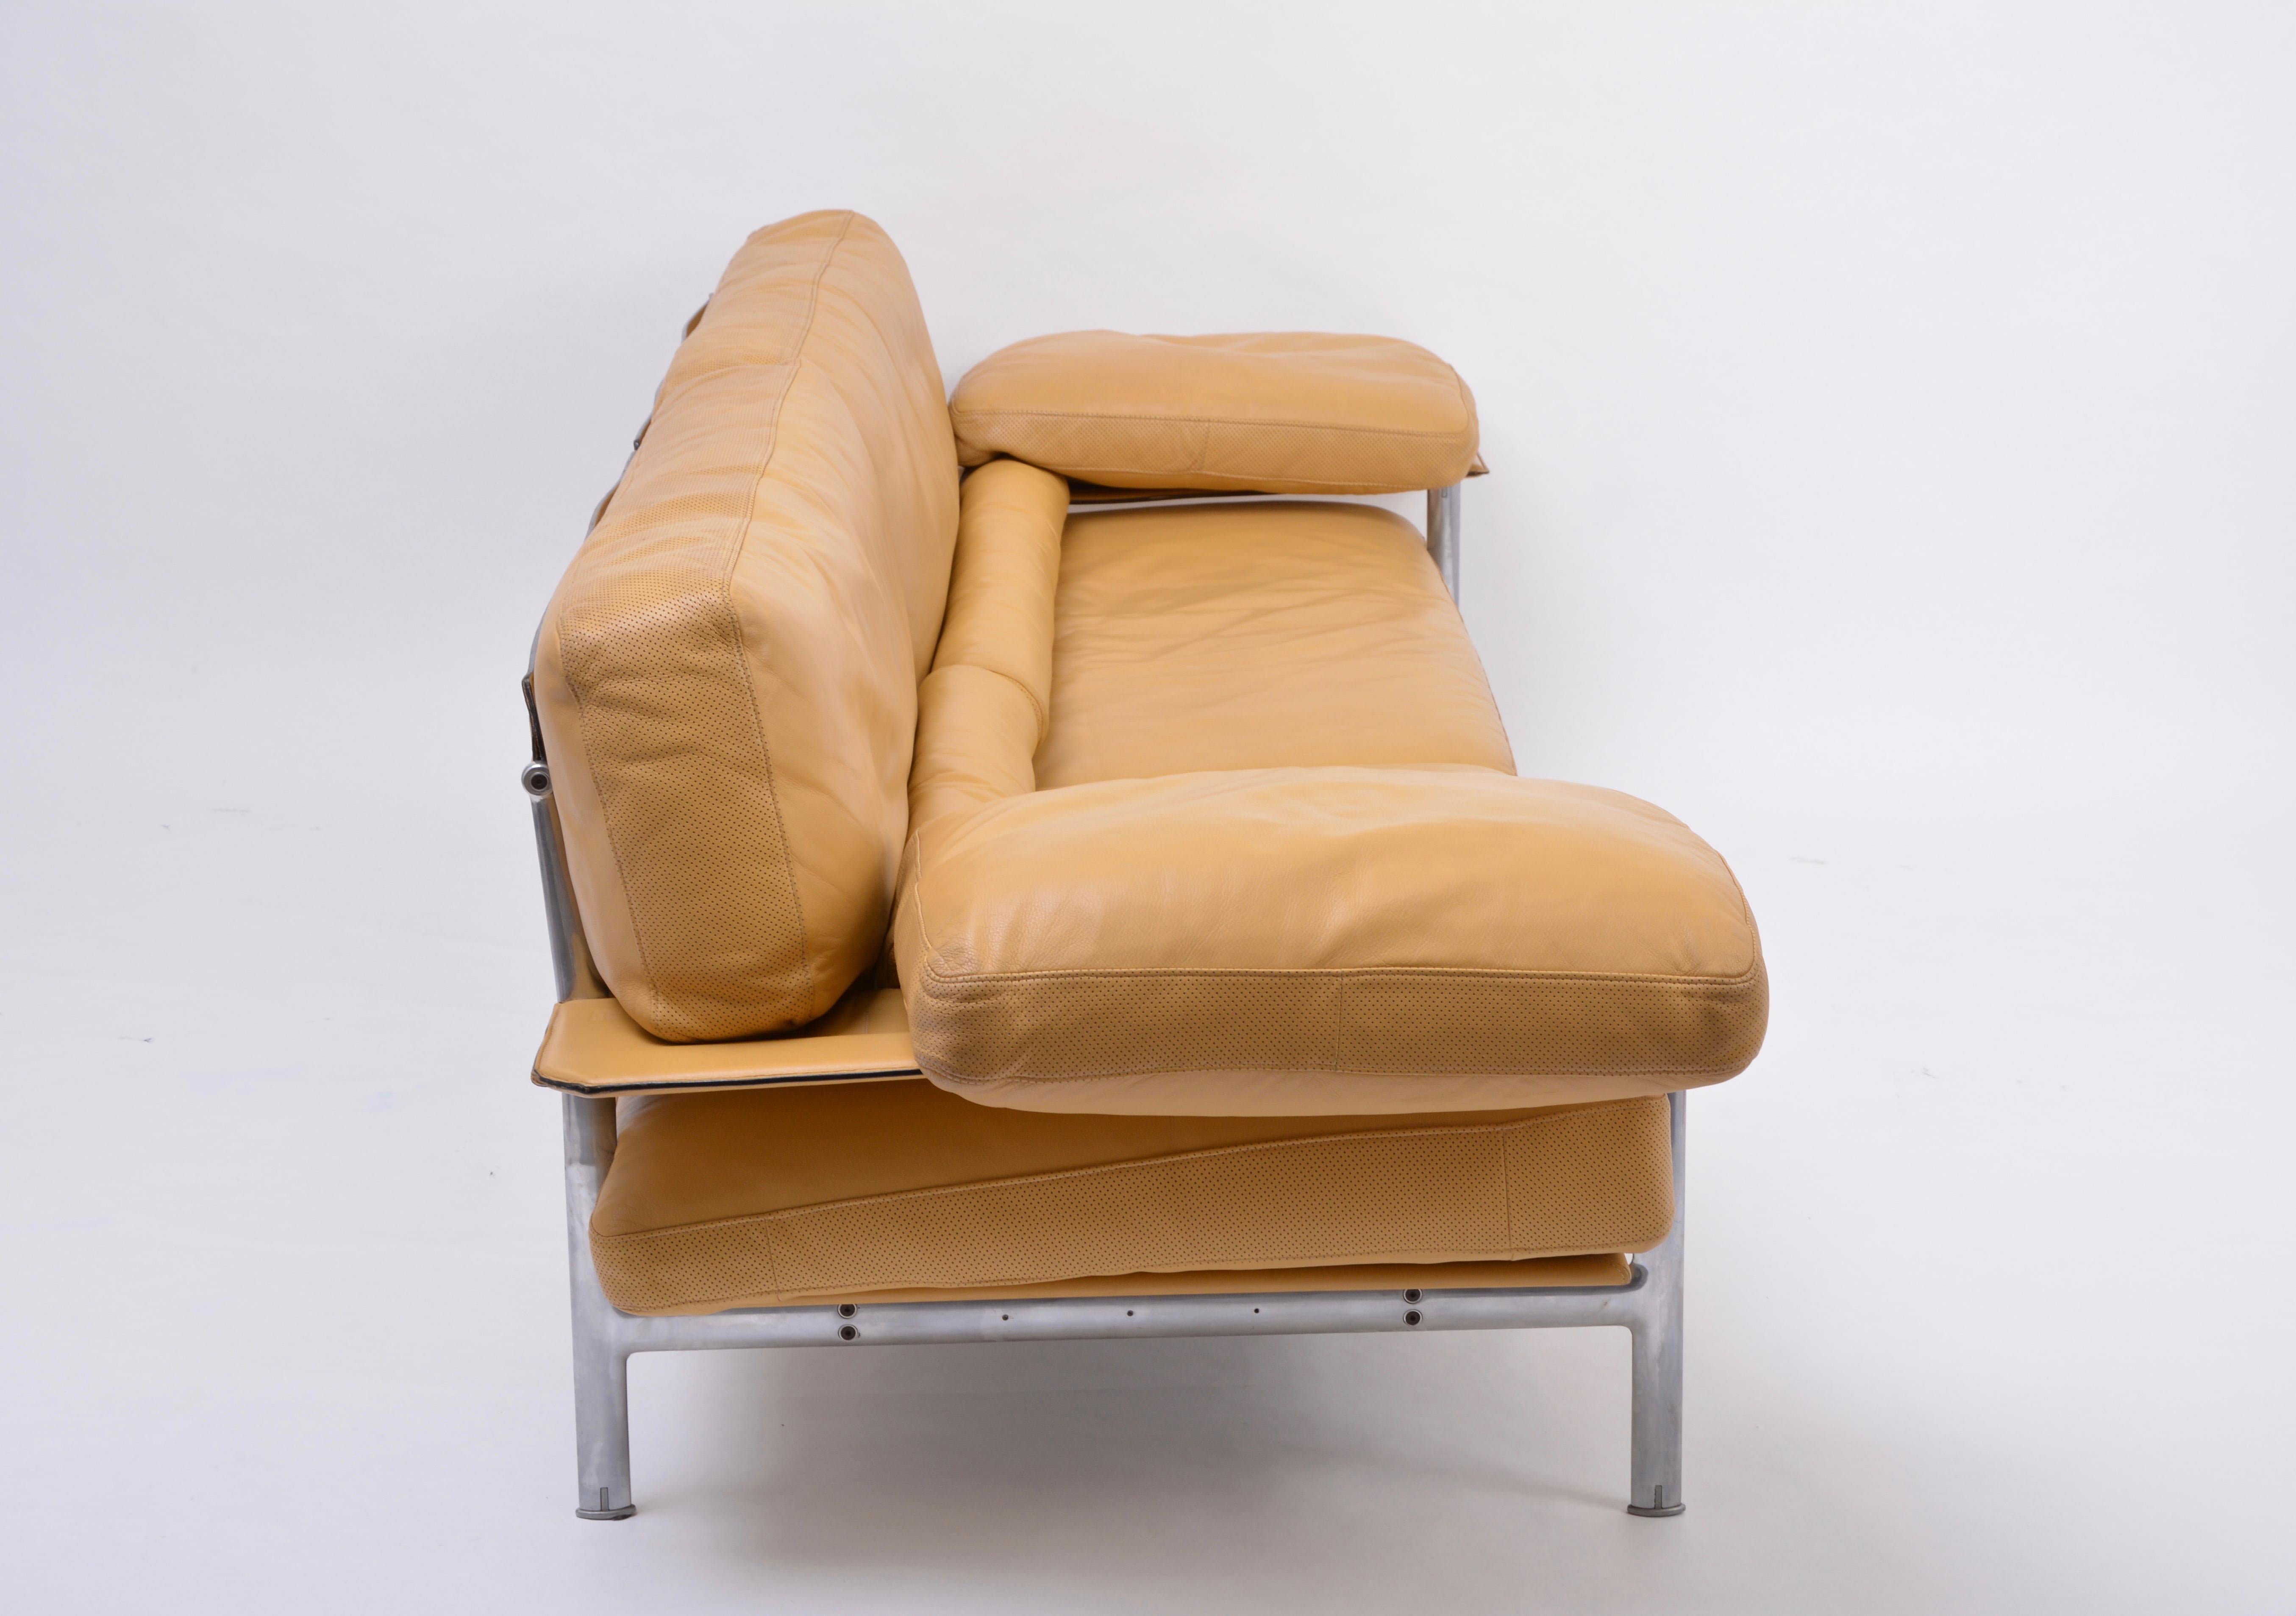 Modern Rare Diesis Sofa in Ochre Colored Leather by Citterio & Nava for B&B Italia